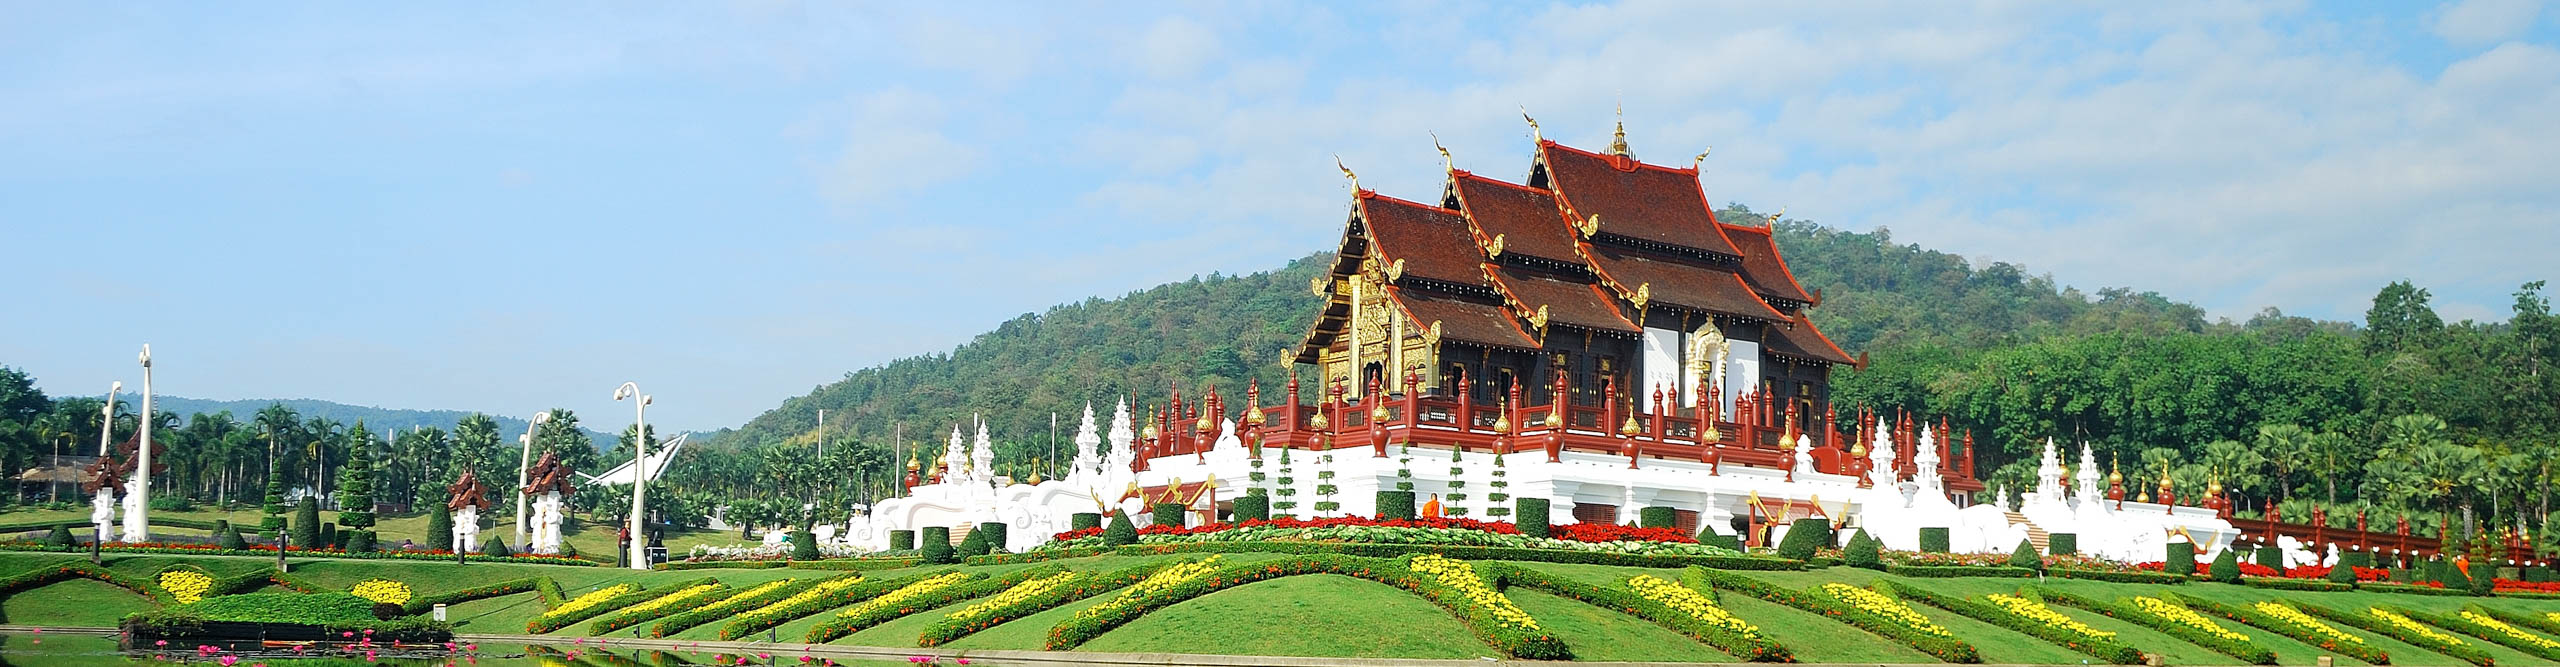 Ho Kham Luang Royal Pavilion in Chiang Mai, Thailand